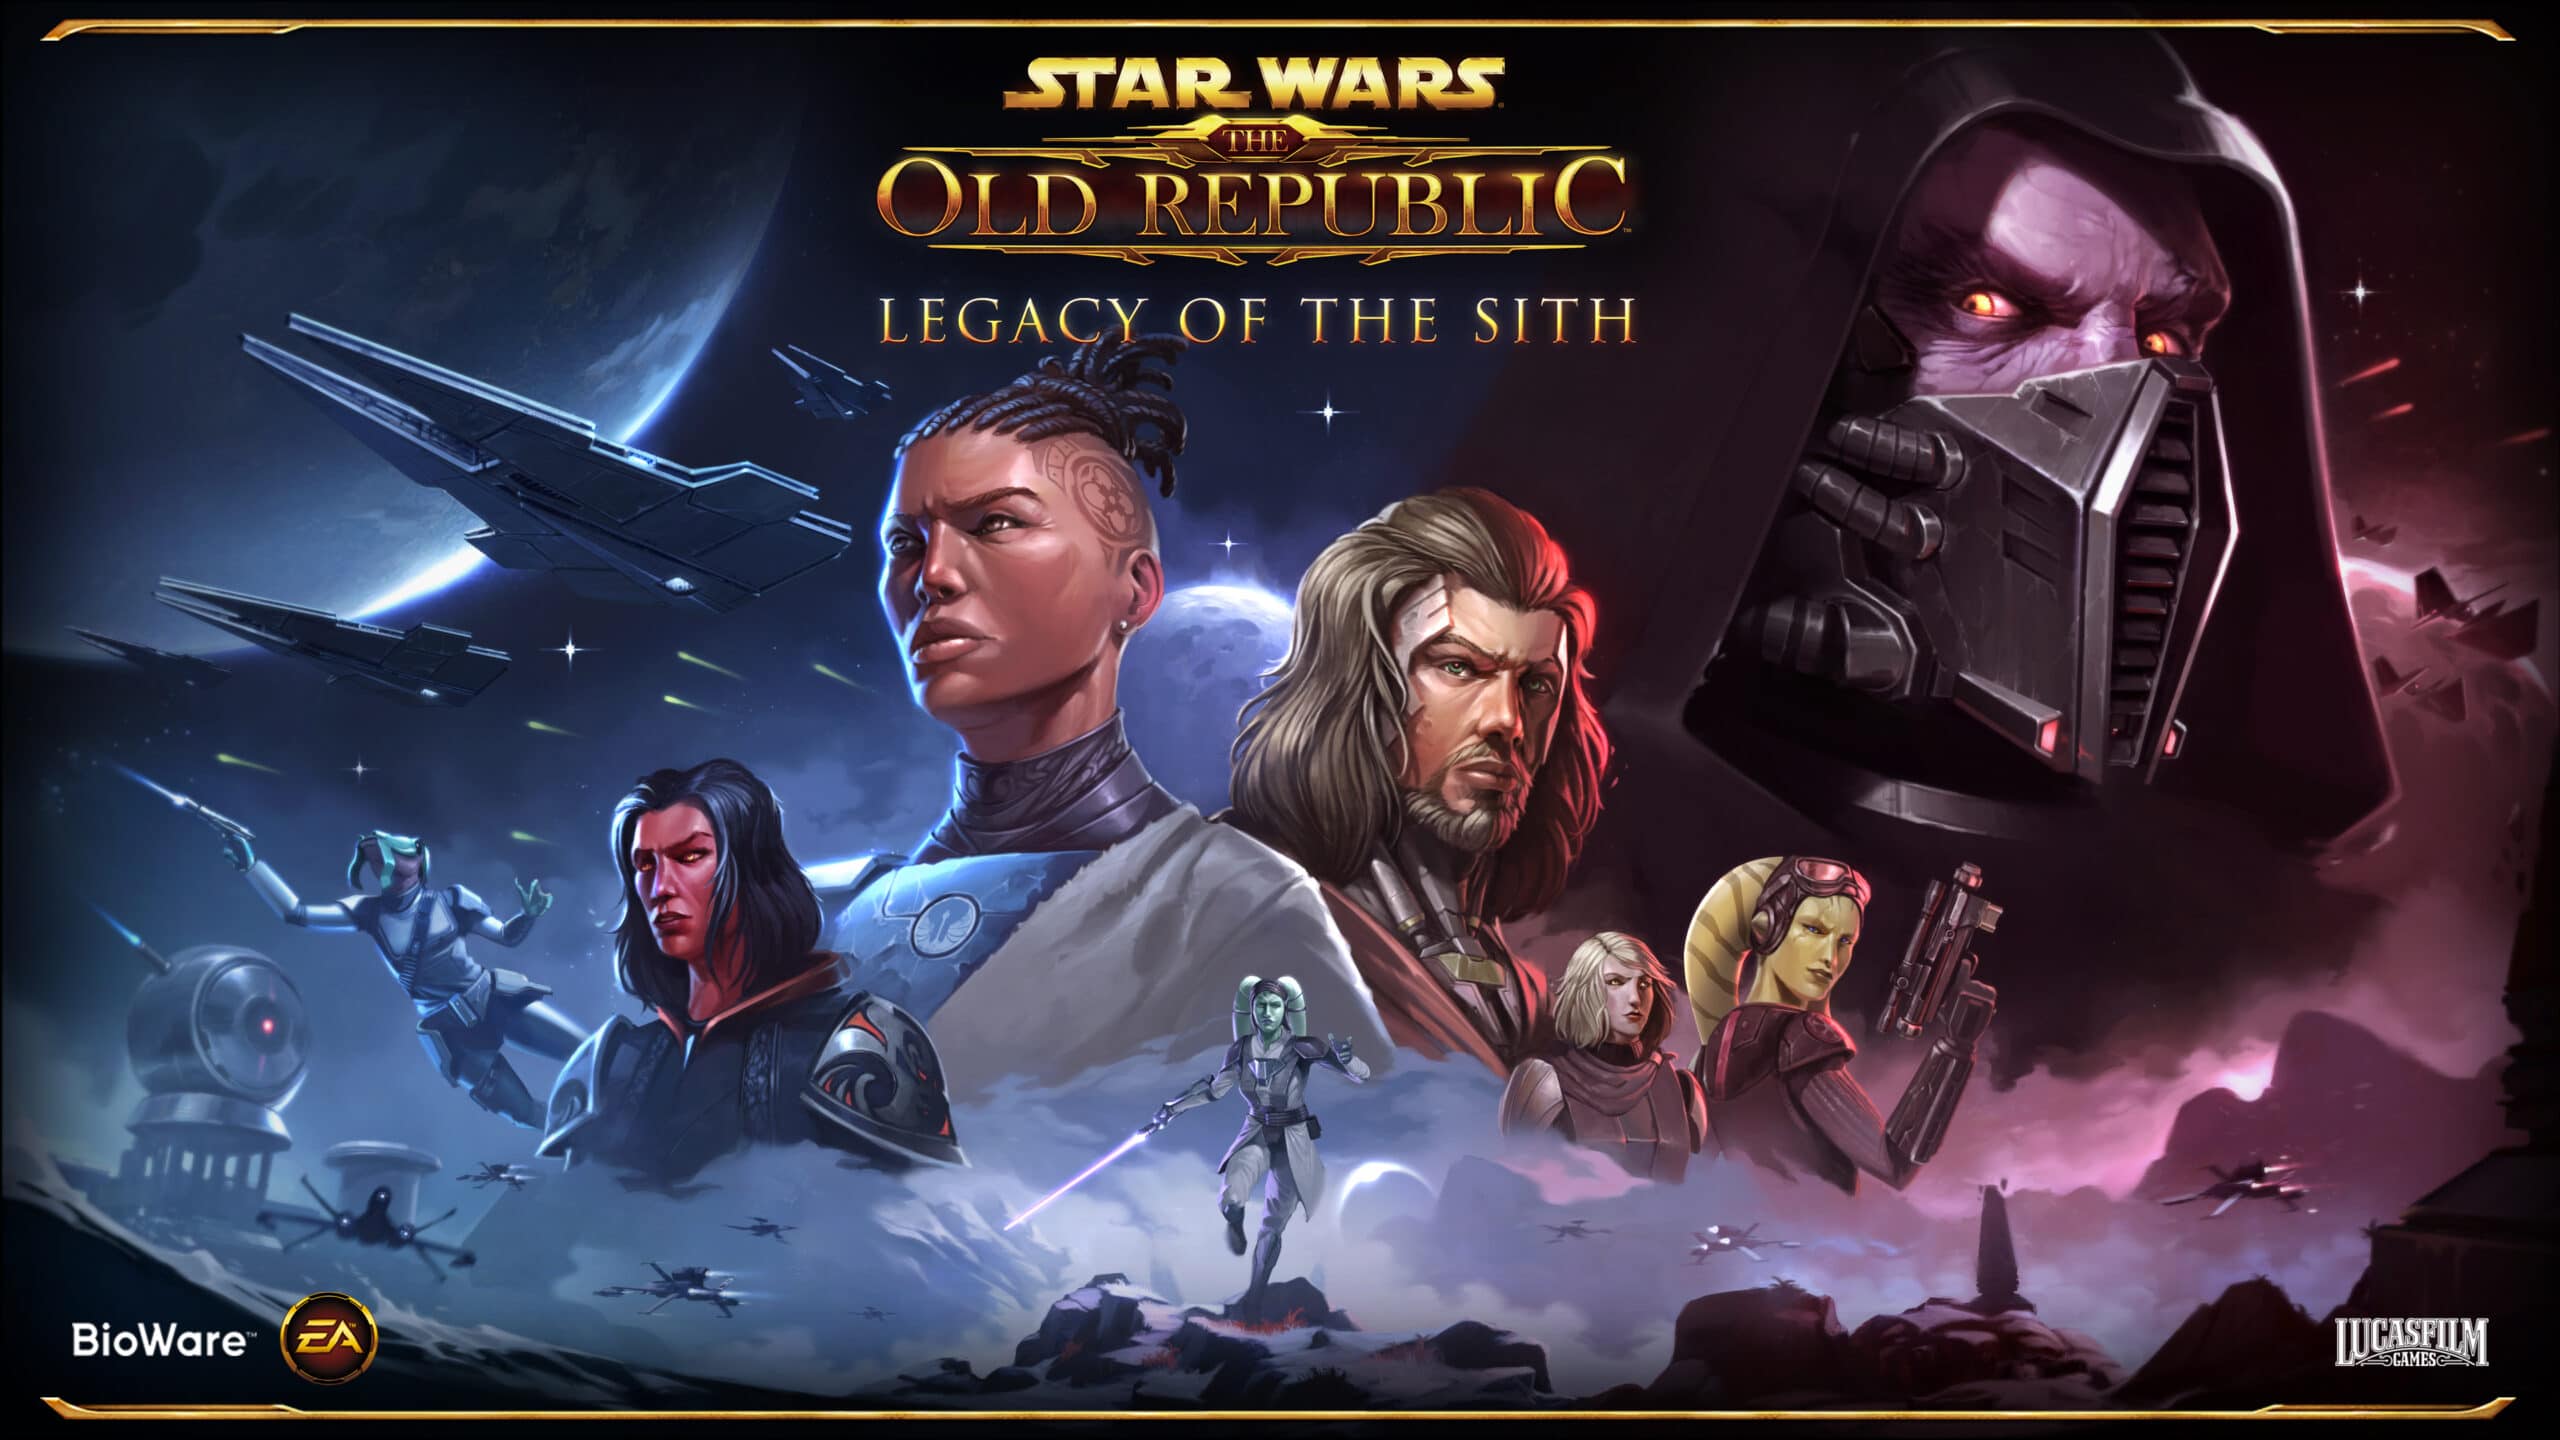 Il nuovo trailer cinematografico di Star Wars: The Old Republic - Legacy of the Sith thumbnail